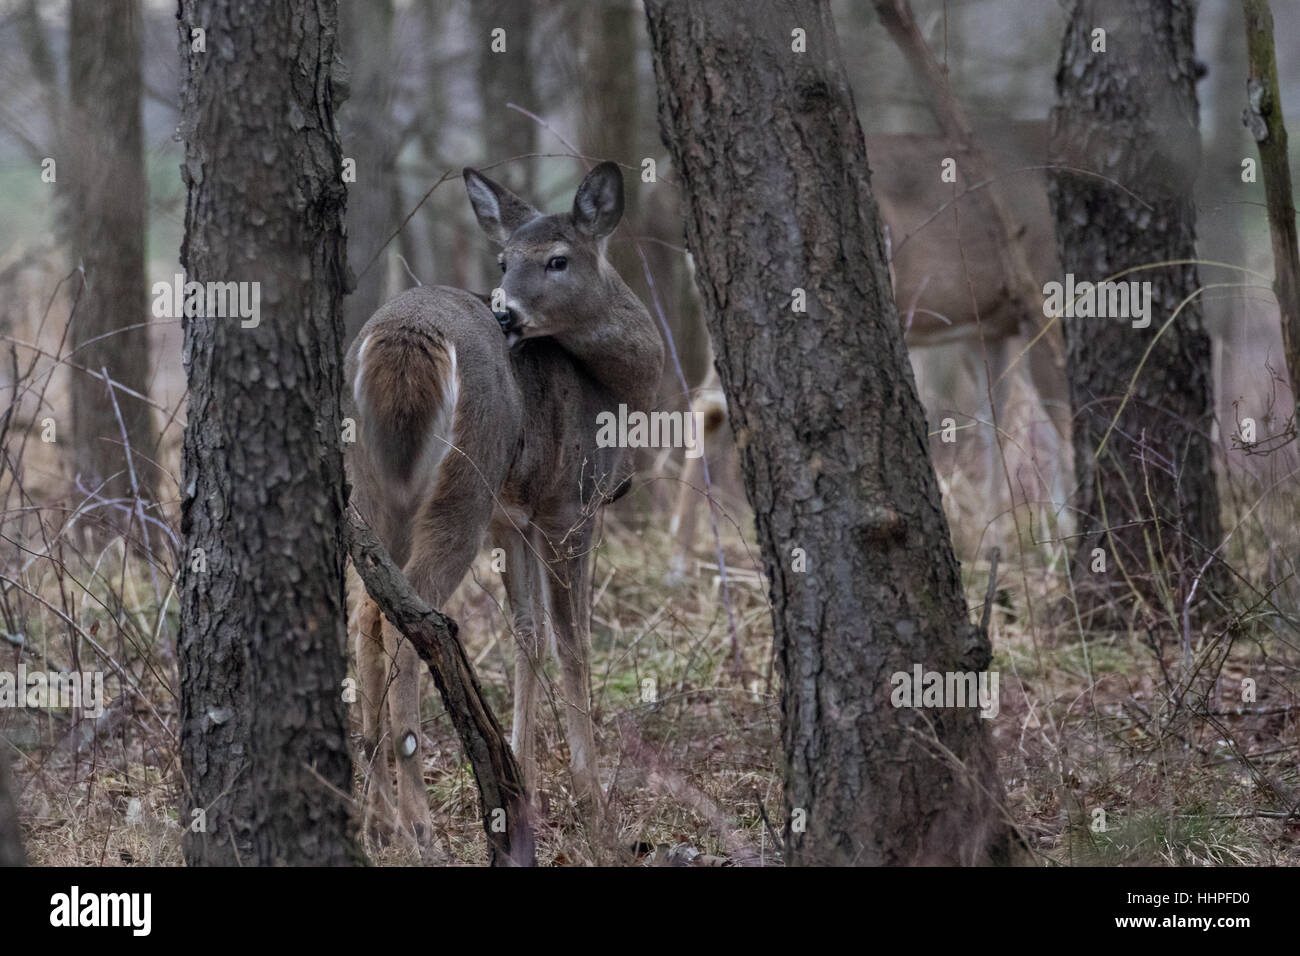 White-tailed deer doe Stock Photo